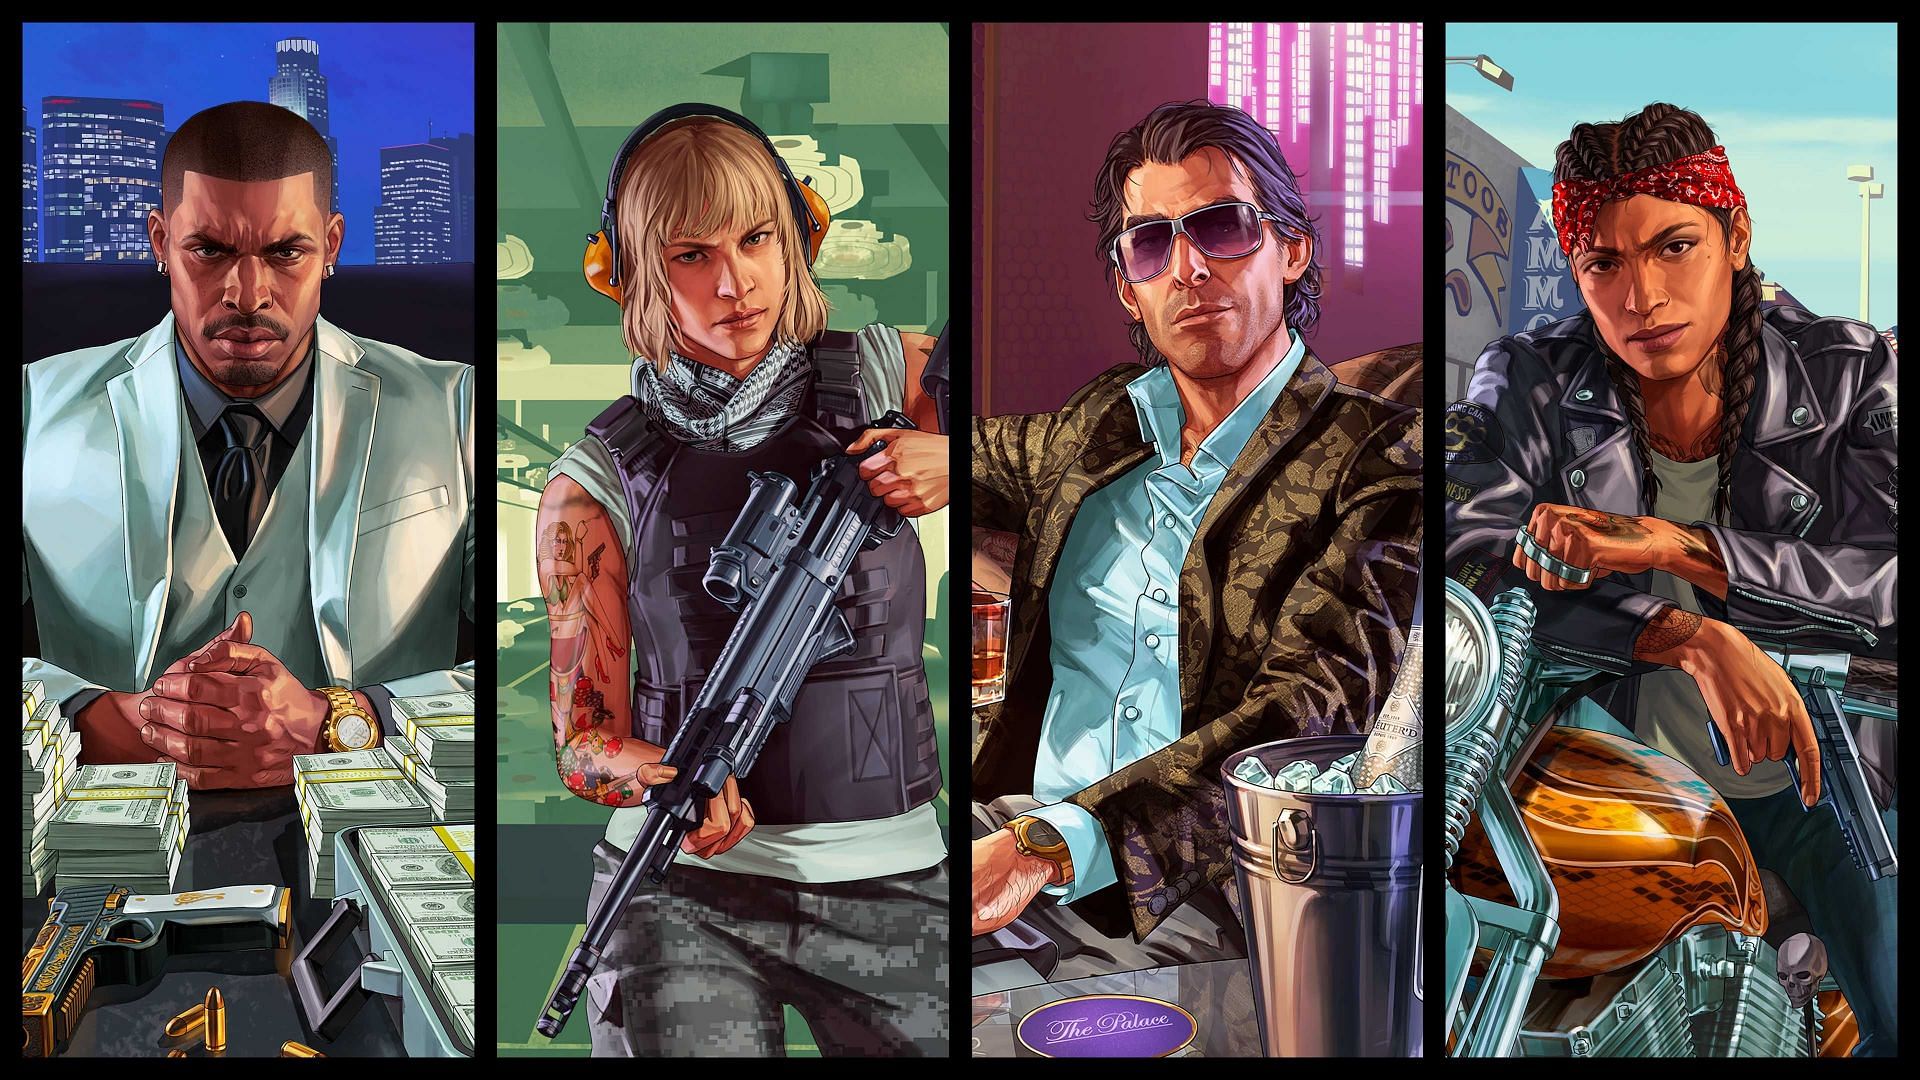 The official artwork featuring Career Builder (Image via Rockstar Games)